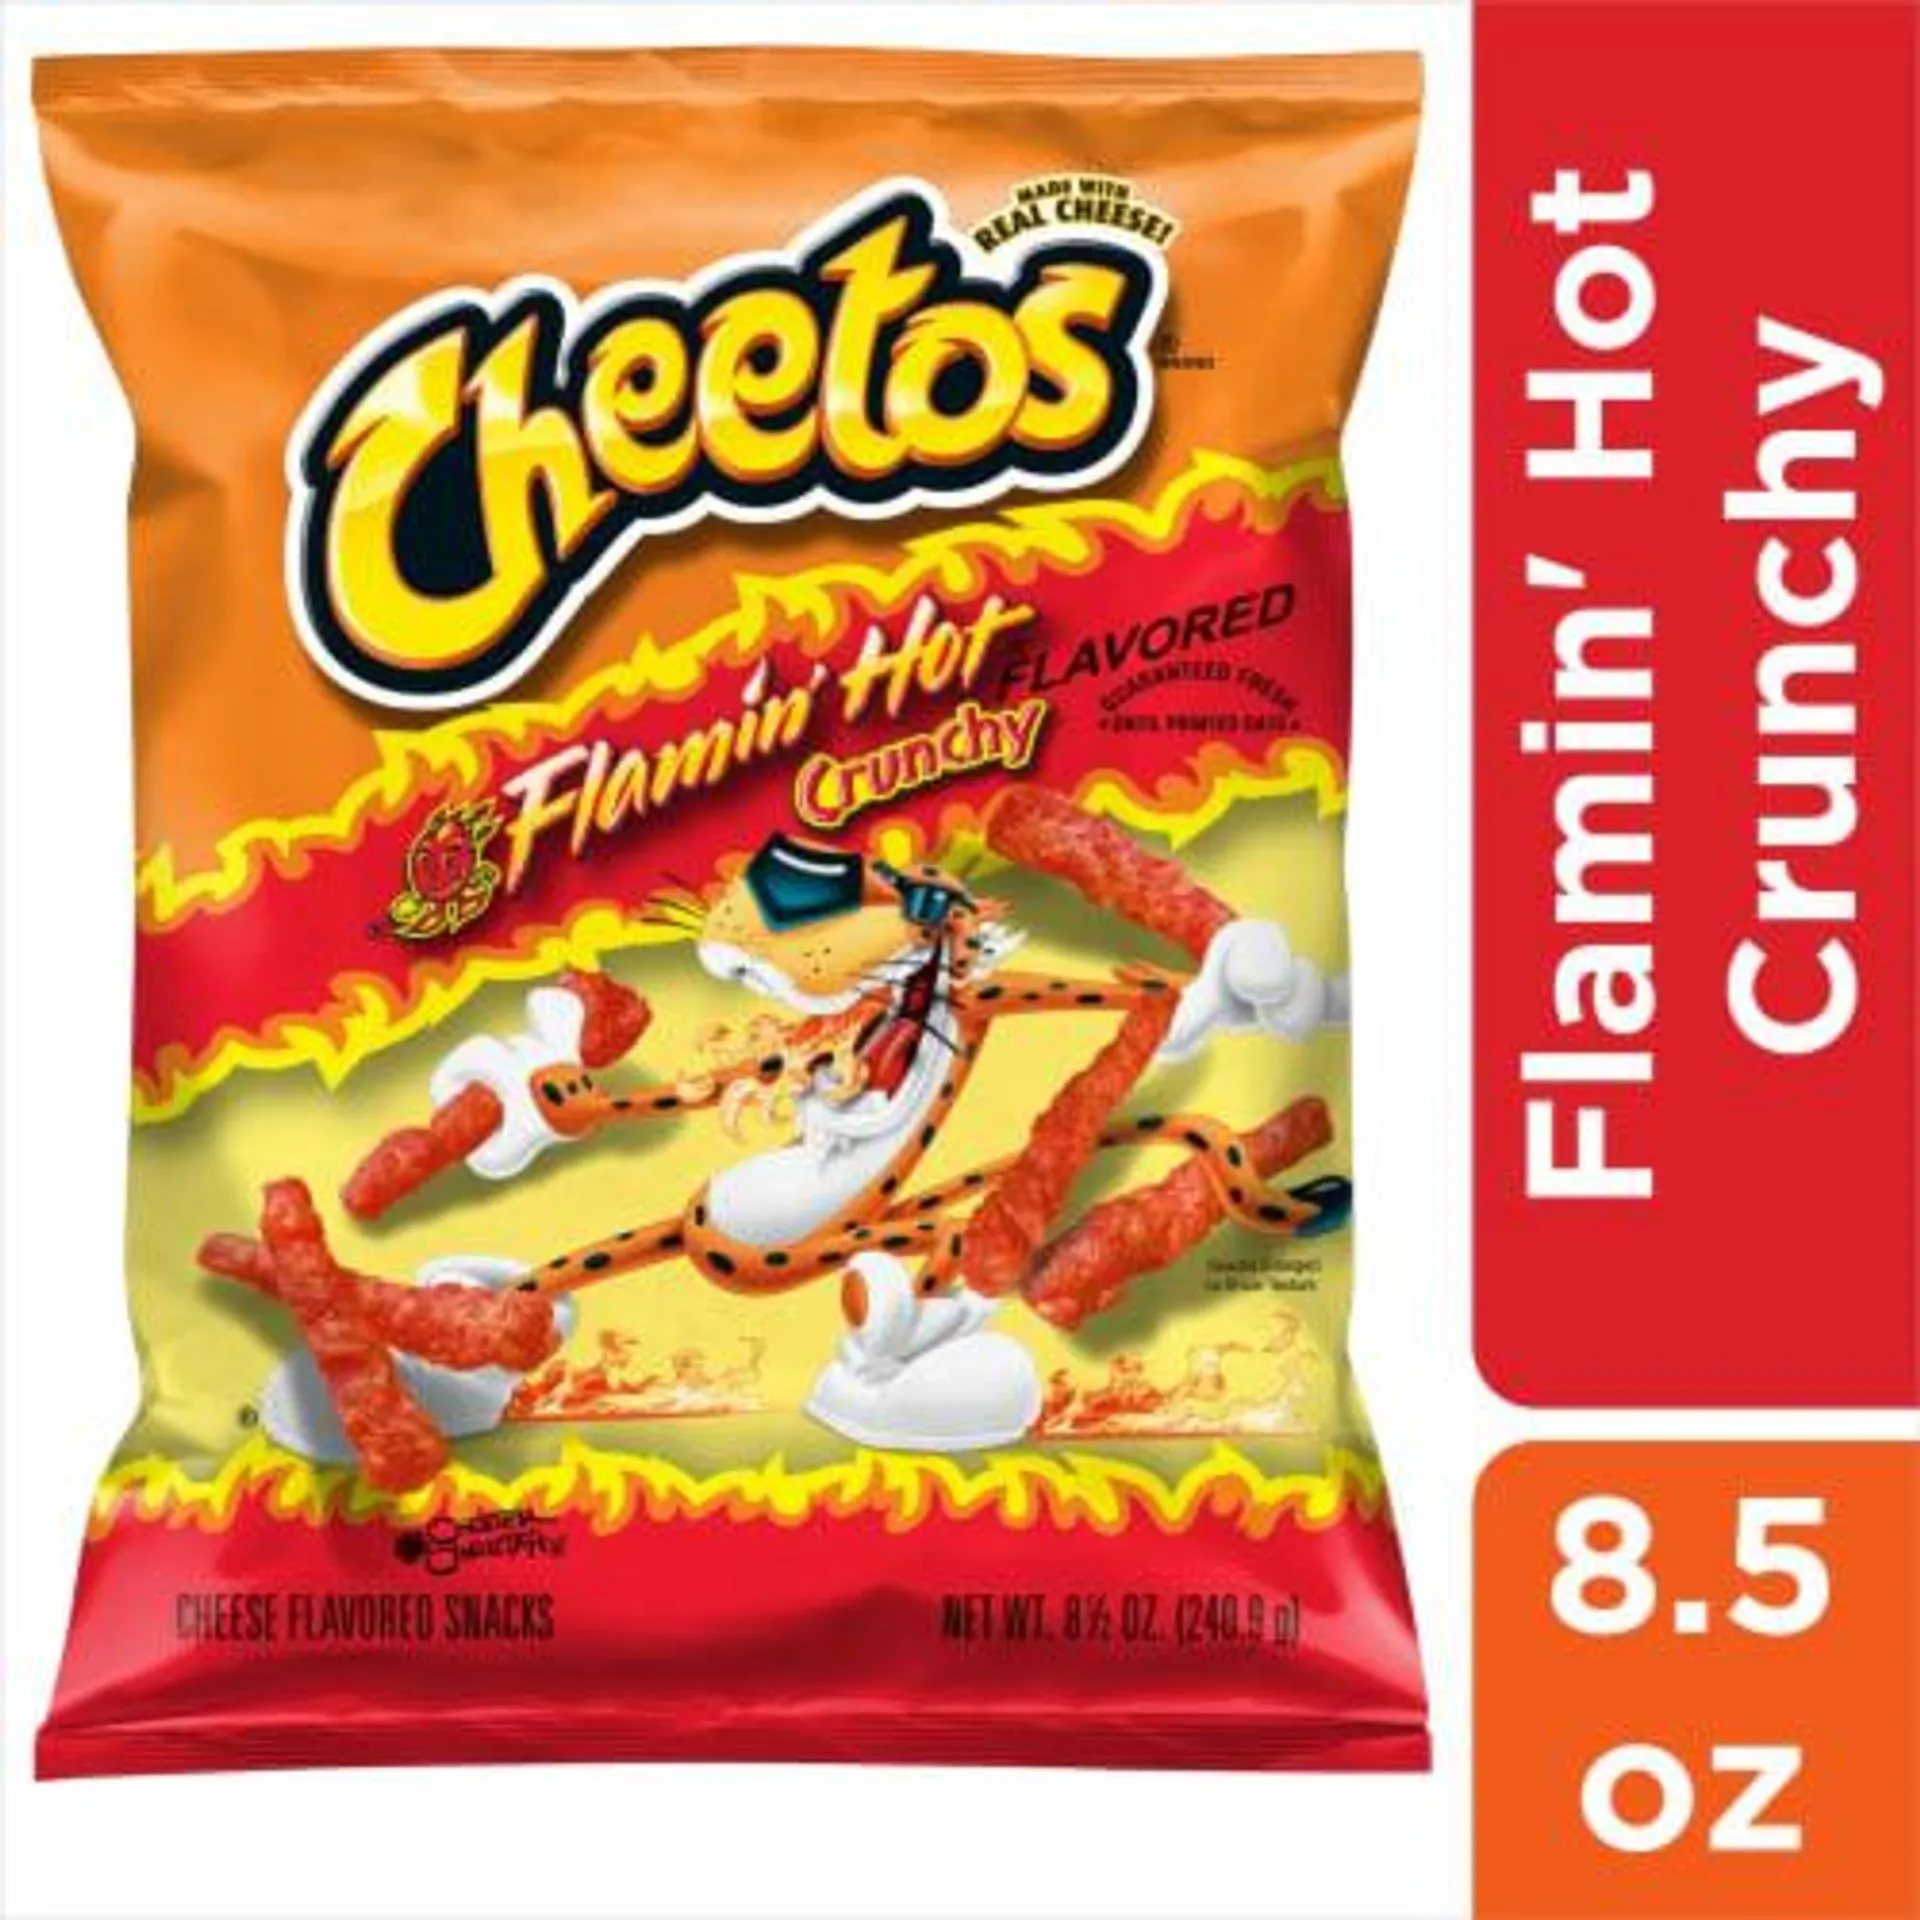 Cheetos® Crunchy Flamin' Hot Chips